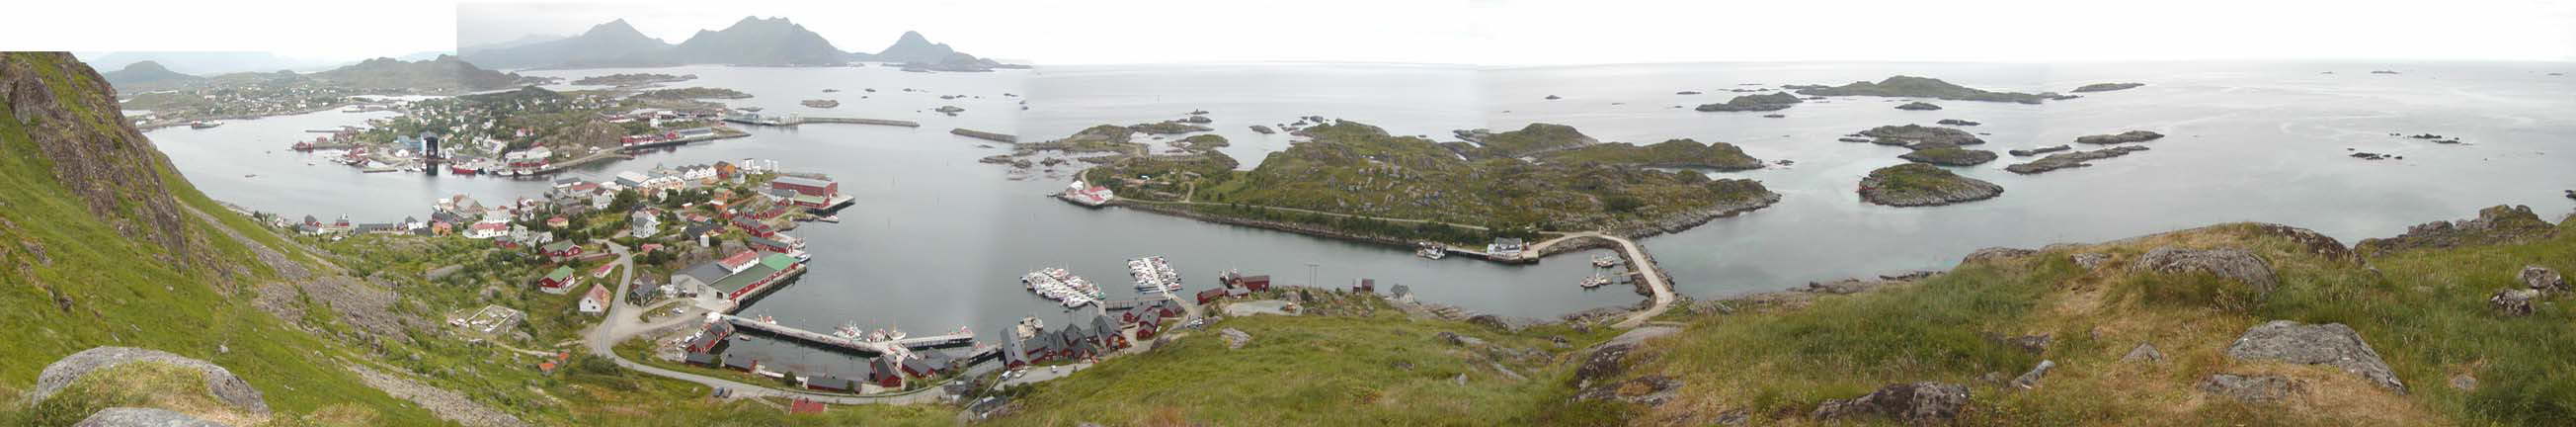 Ballstad Harbor Lofoten Islands, Norway